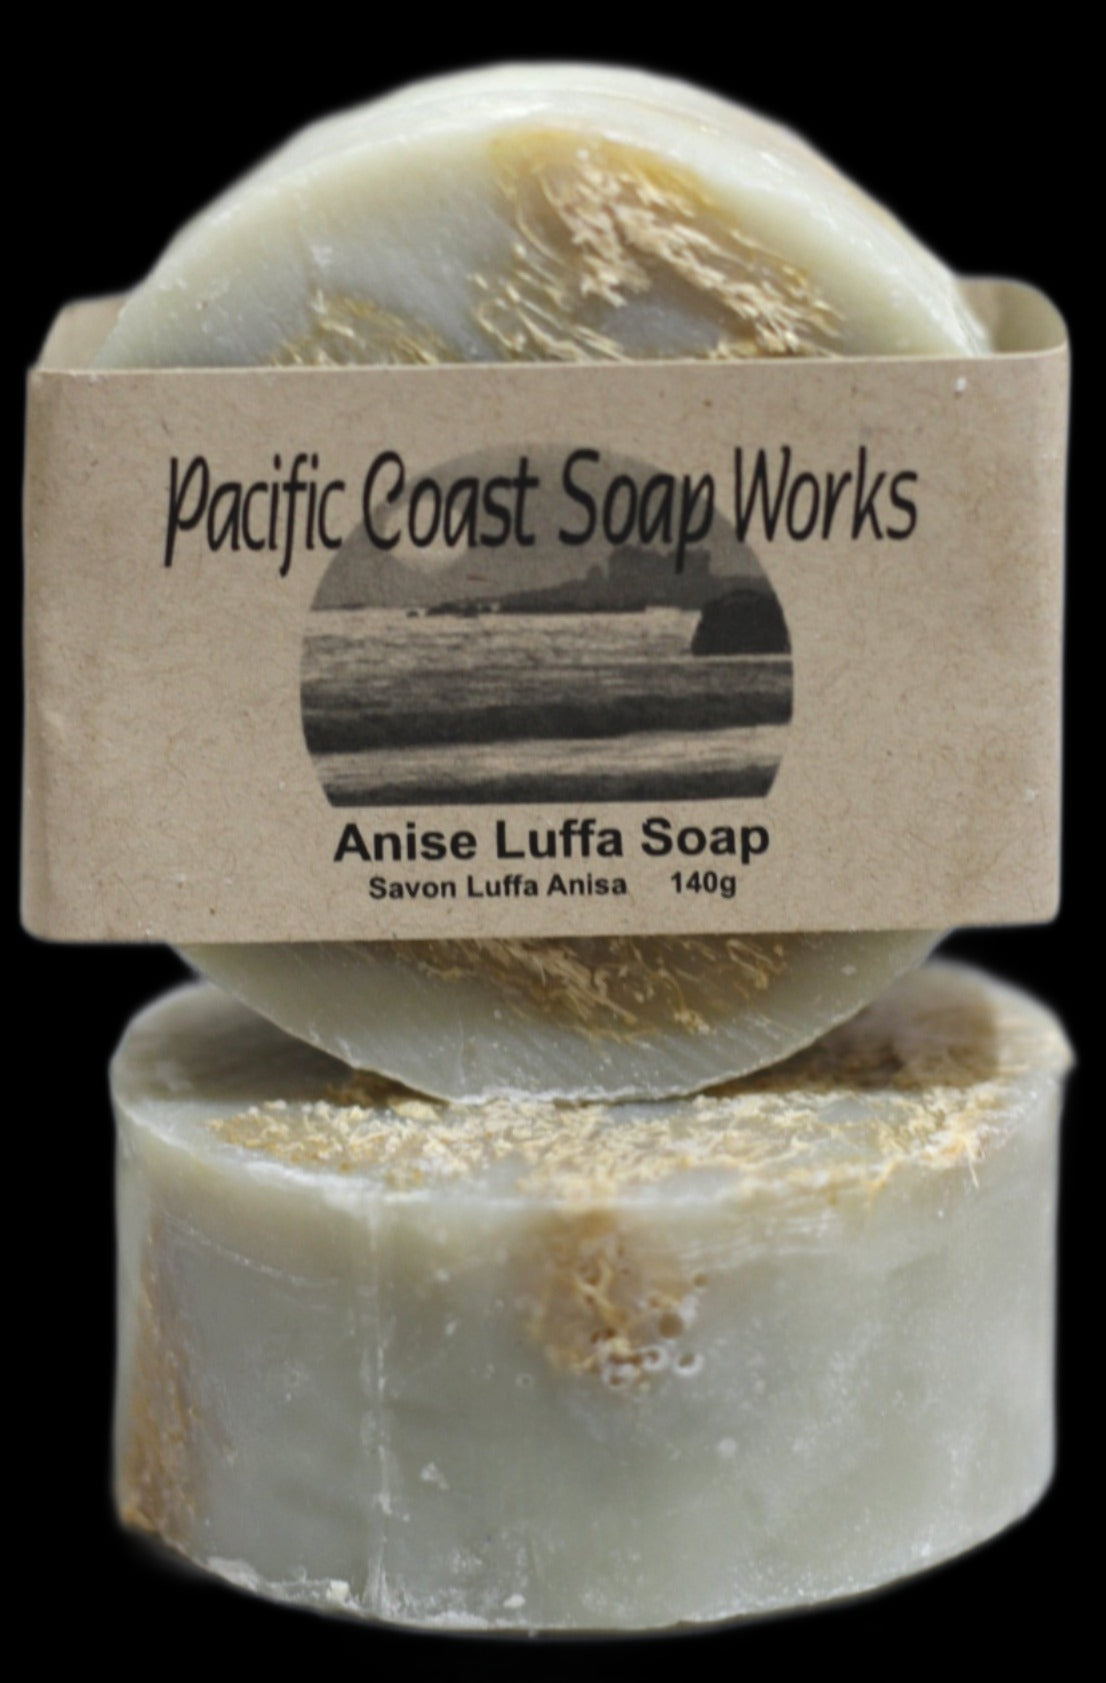 anise luffa soap bar. black licorice soap. luffa soap bar. luffa body scrub soap. natural luffa soap. natural soap companies. soap works.